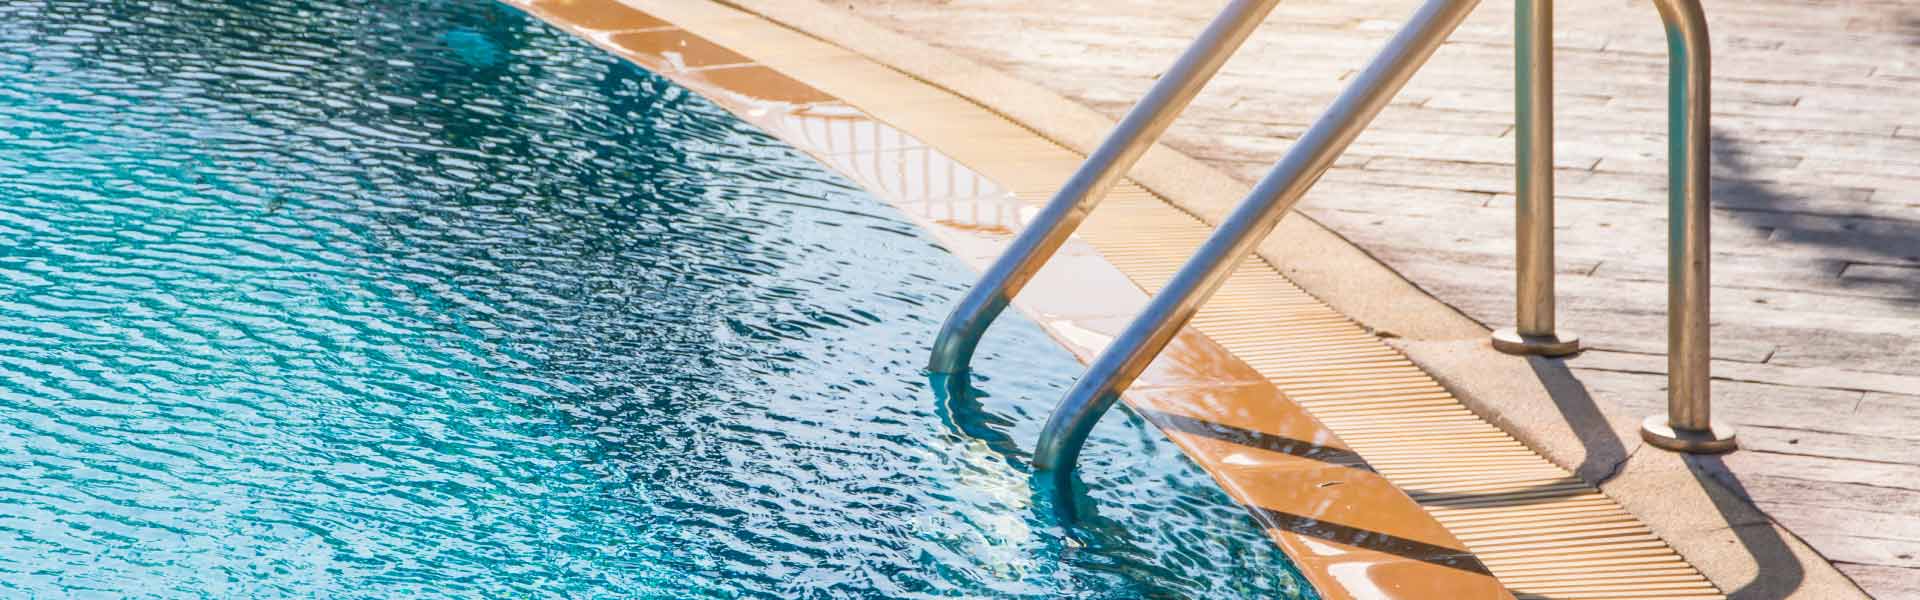 Close-up shot of clean swimming pool